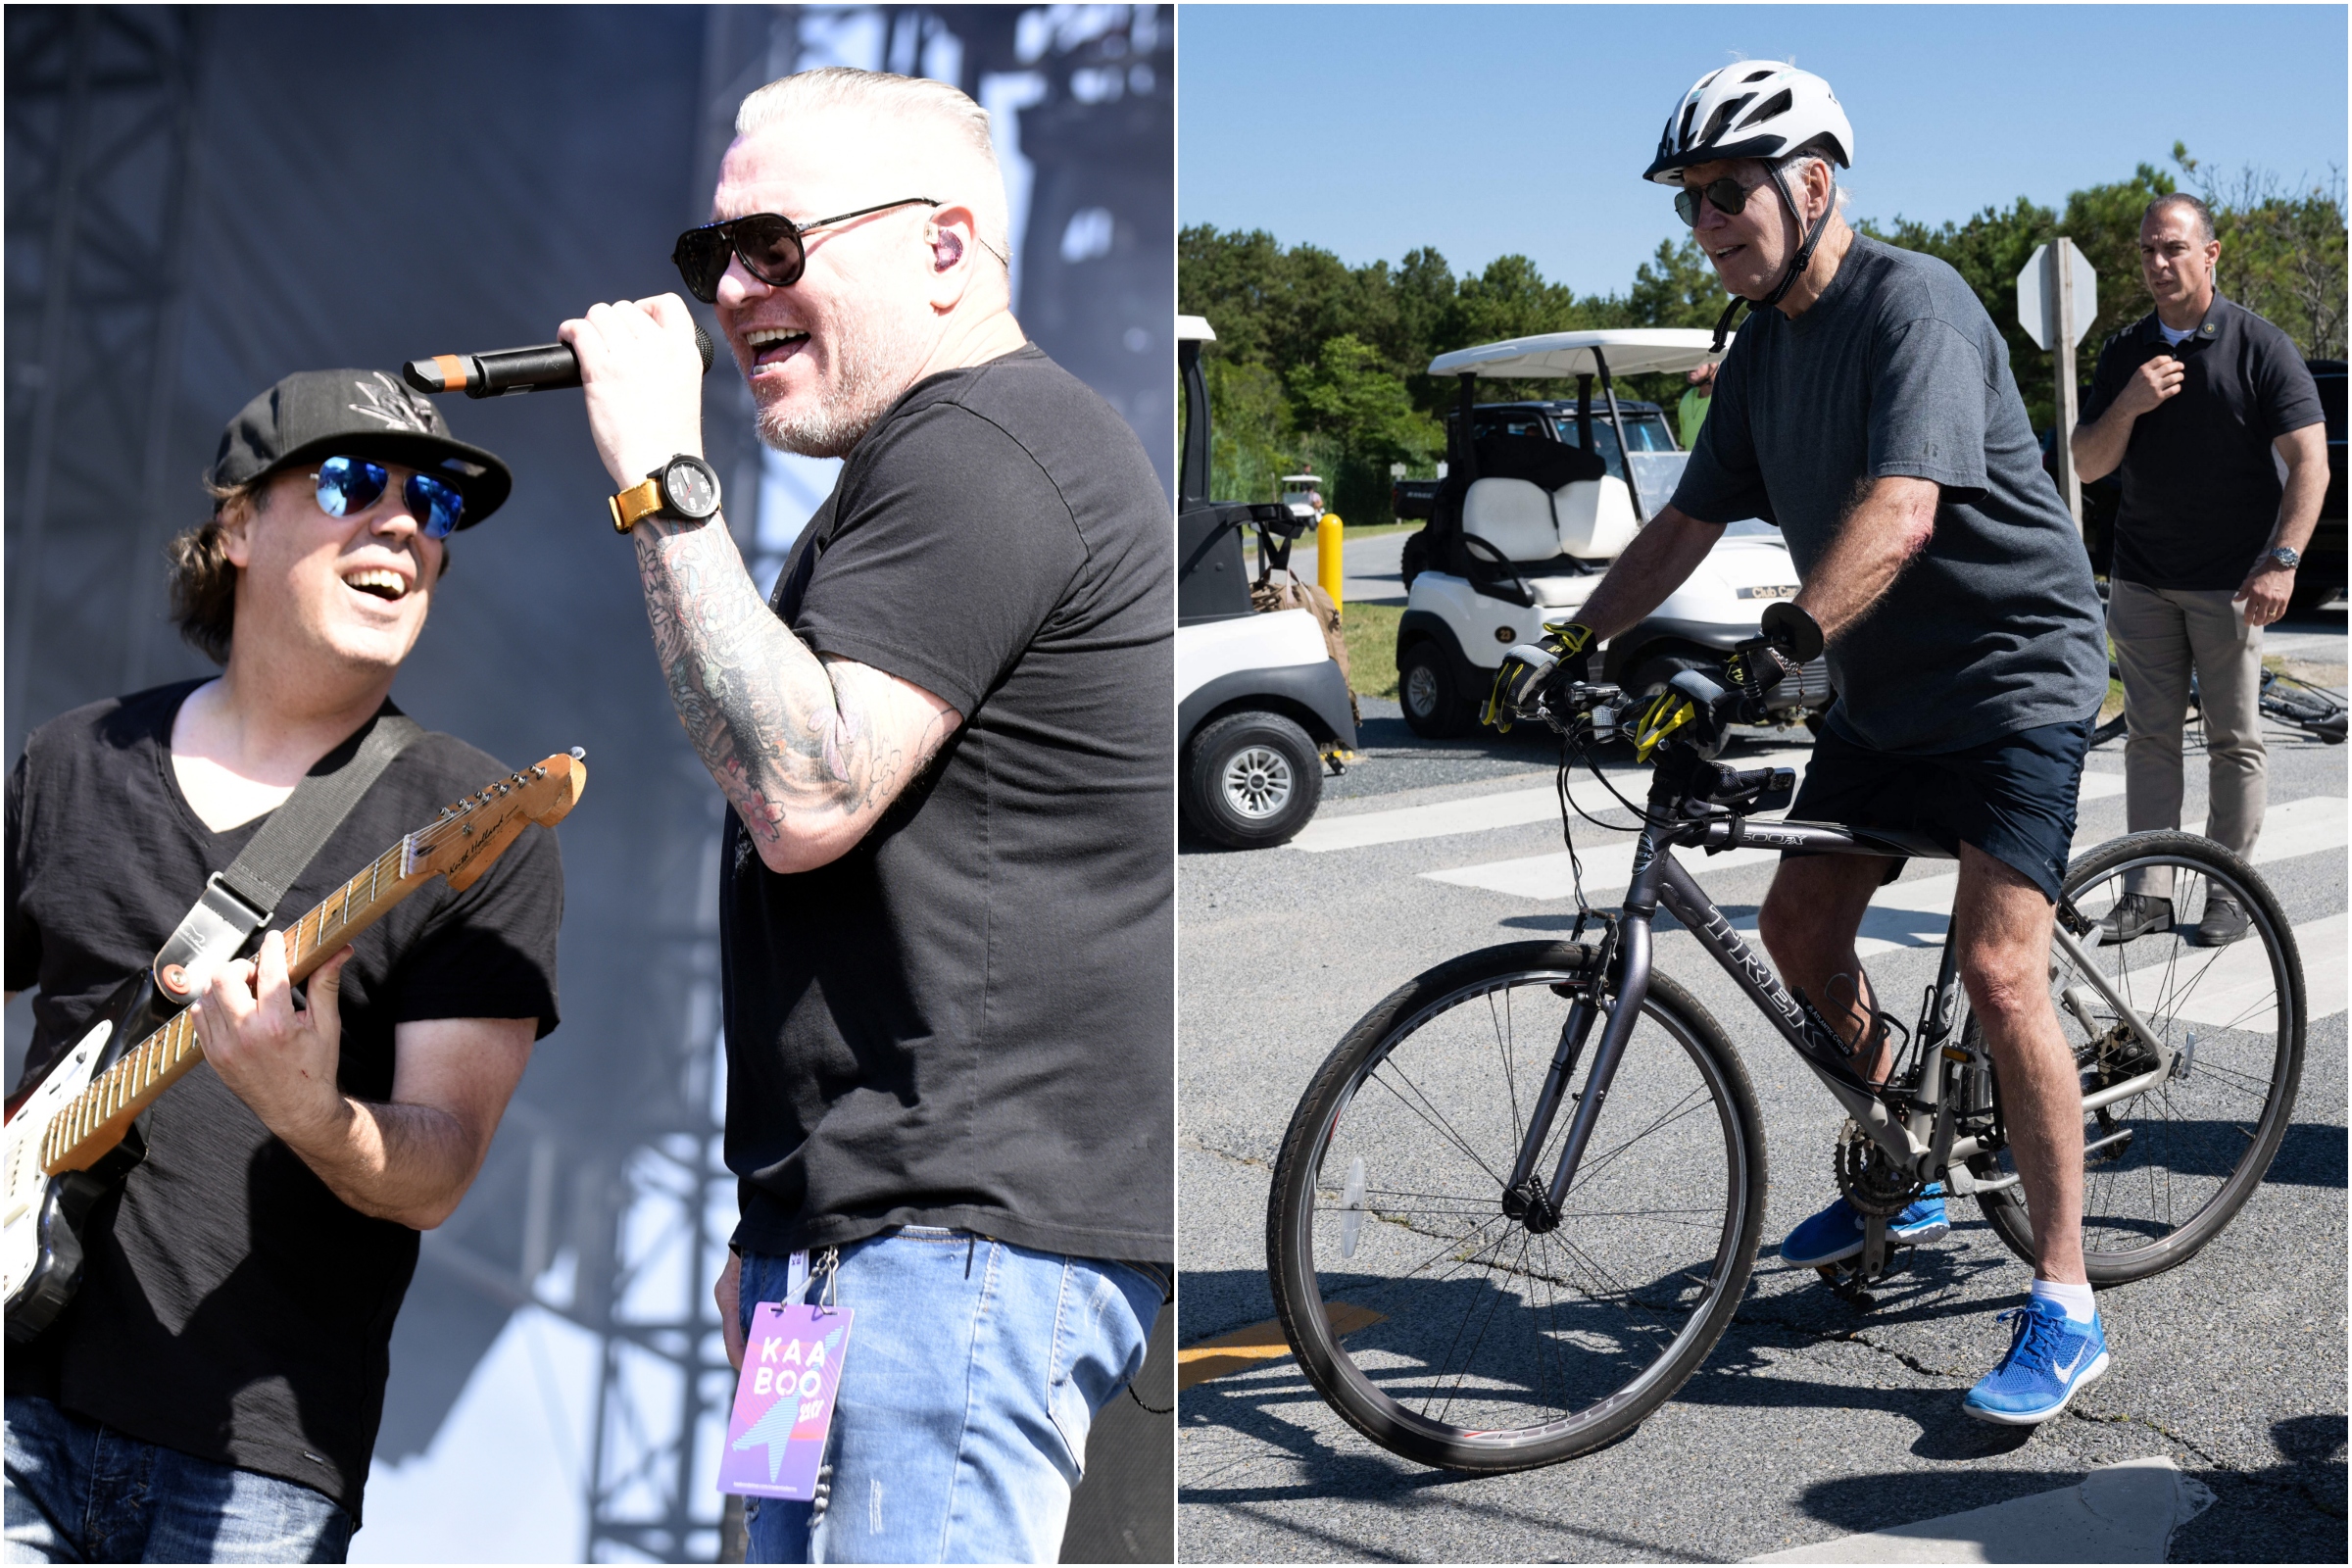 Smash Mouth Says Clip of Joe Biden Falling From Bike Is Funny: 'Lighten Up'